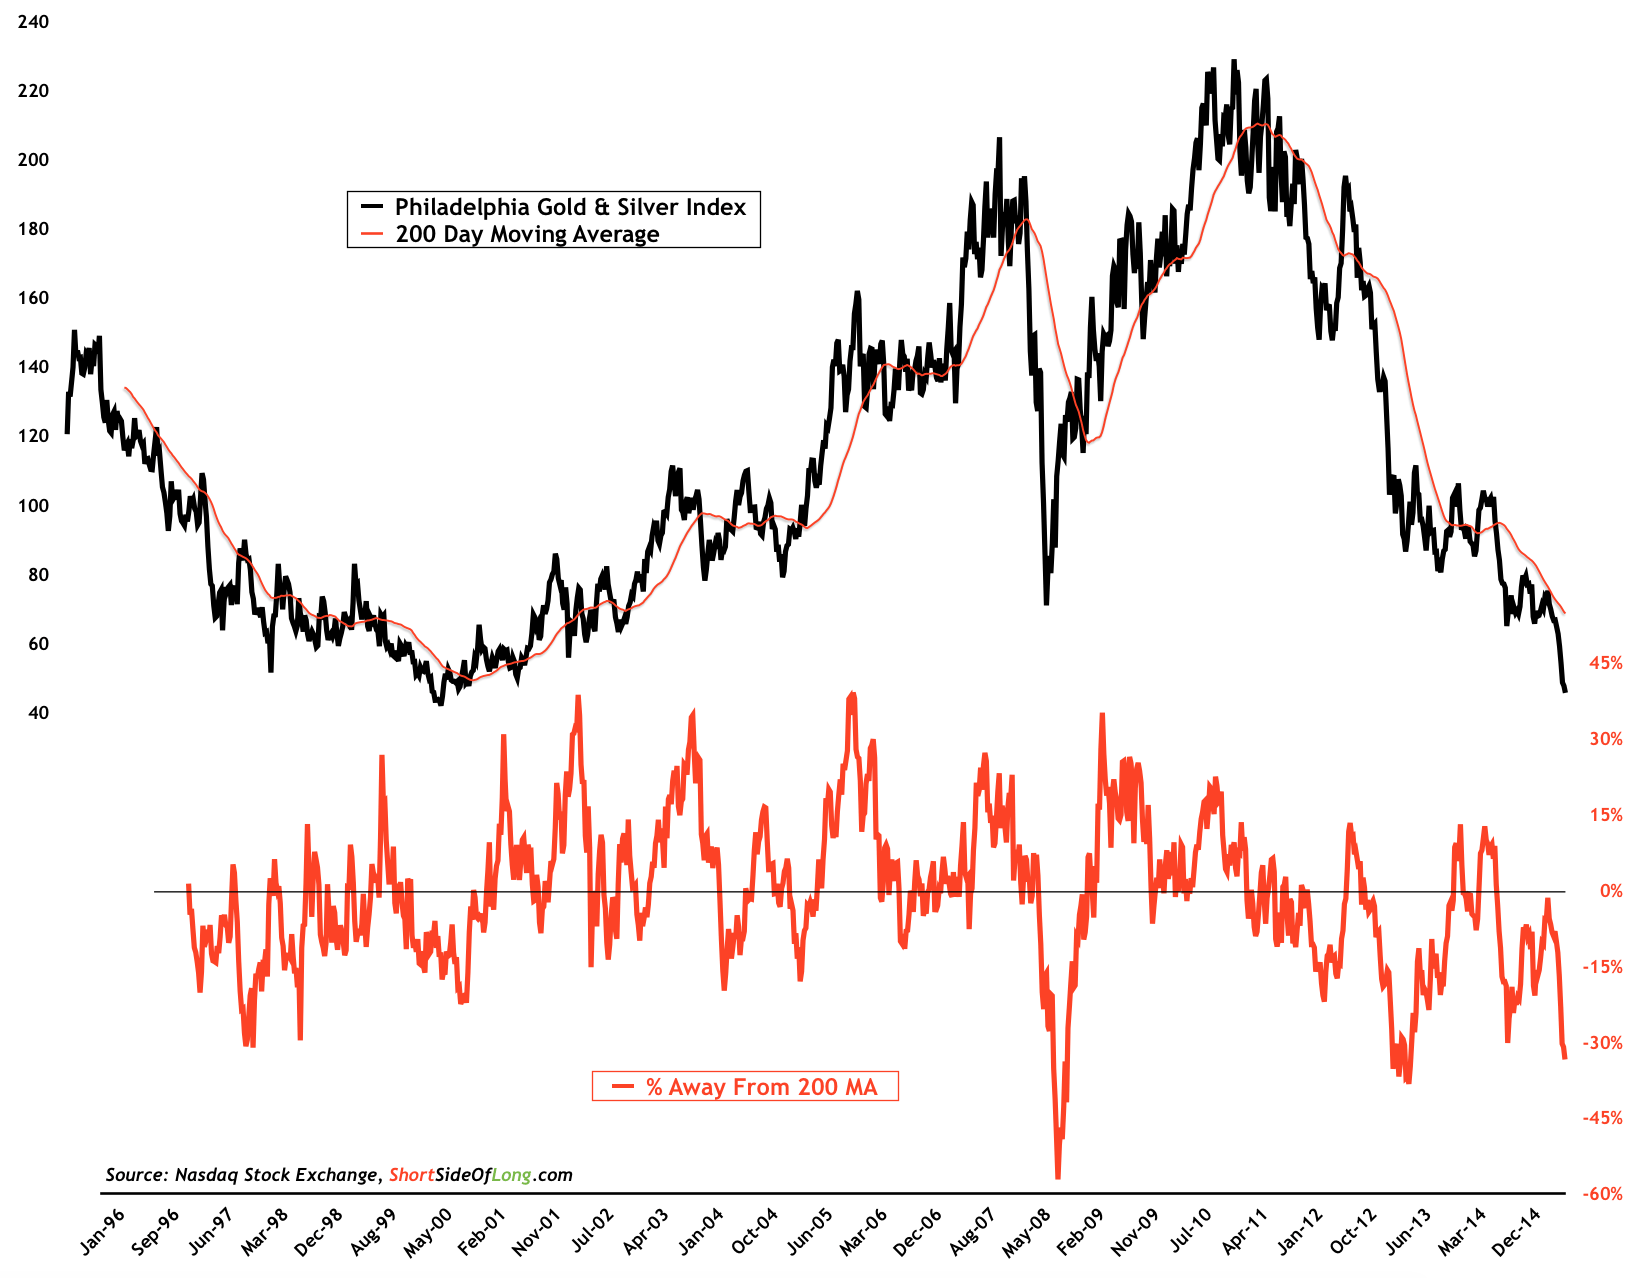 Gold/Silver Index vs 200DMA